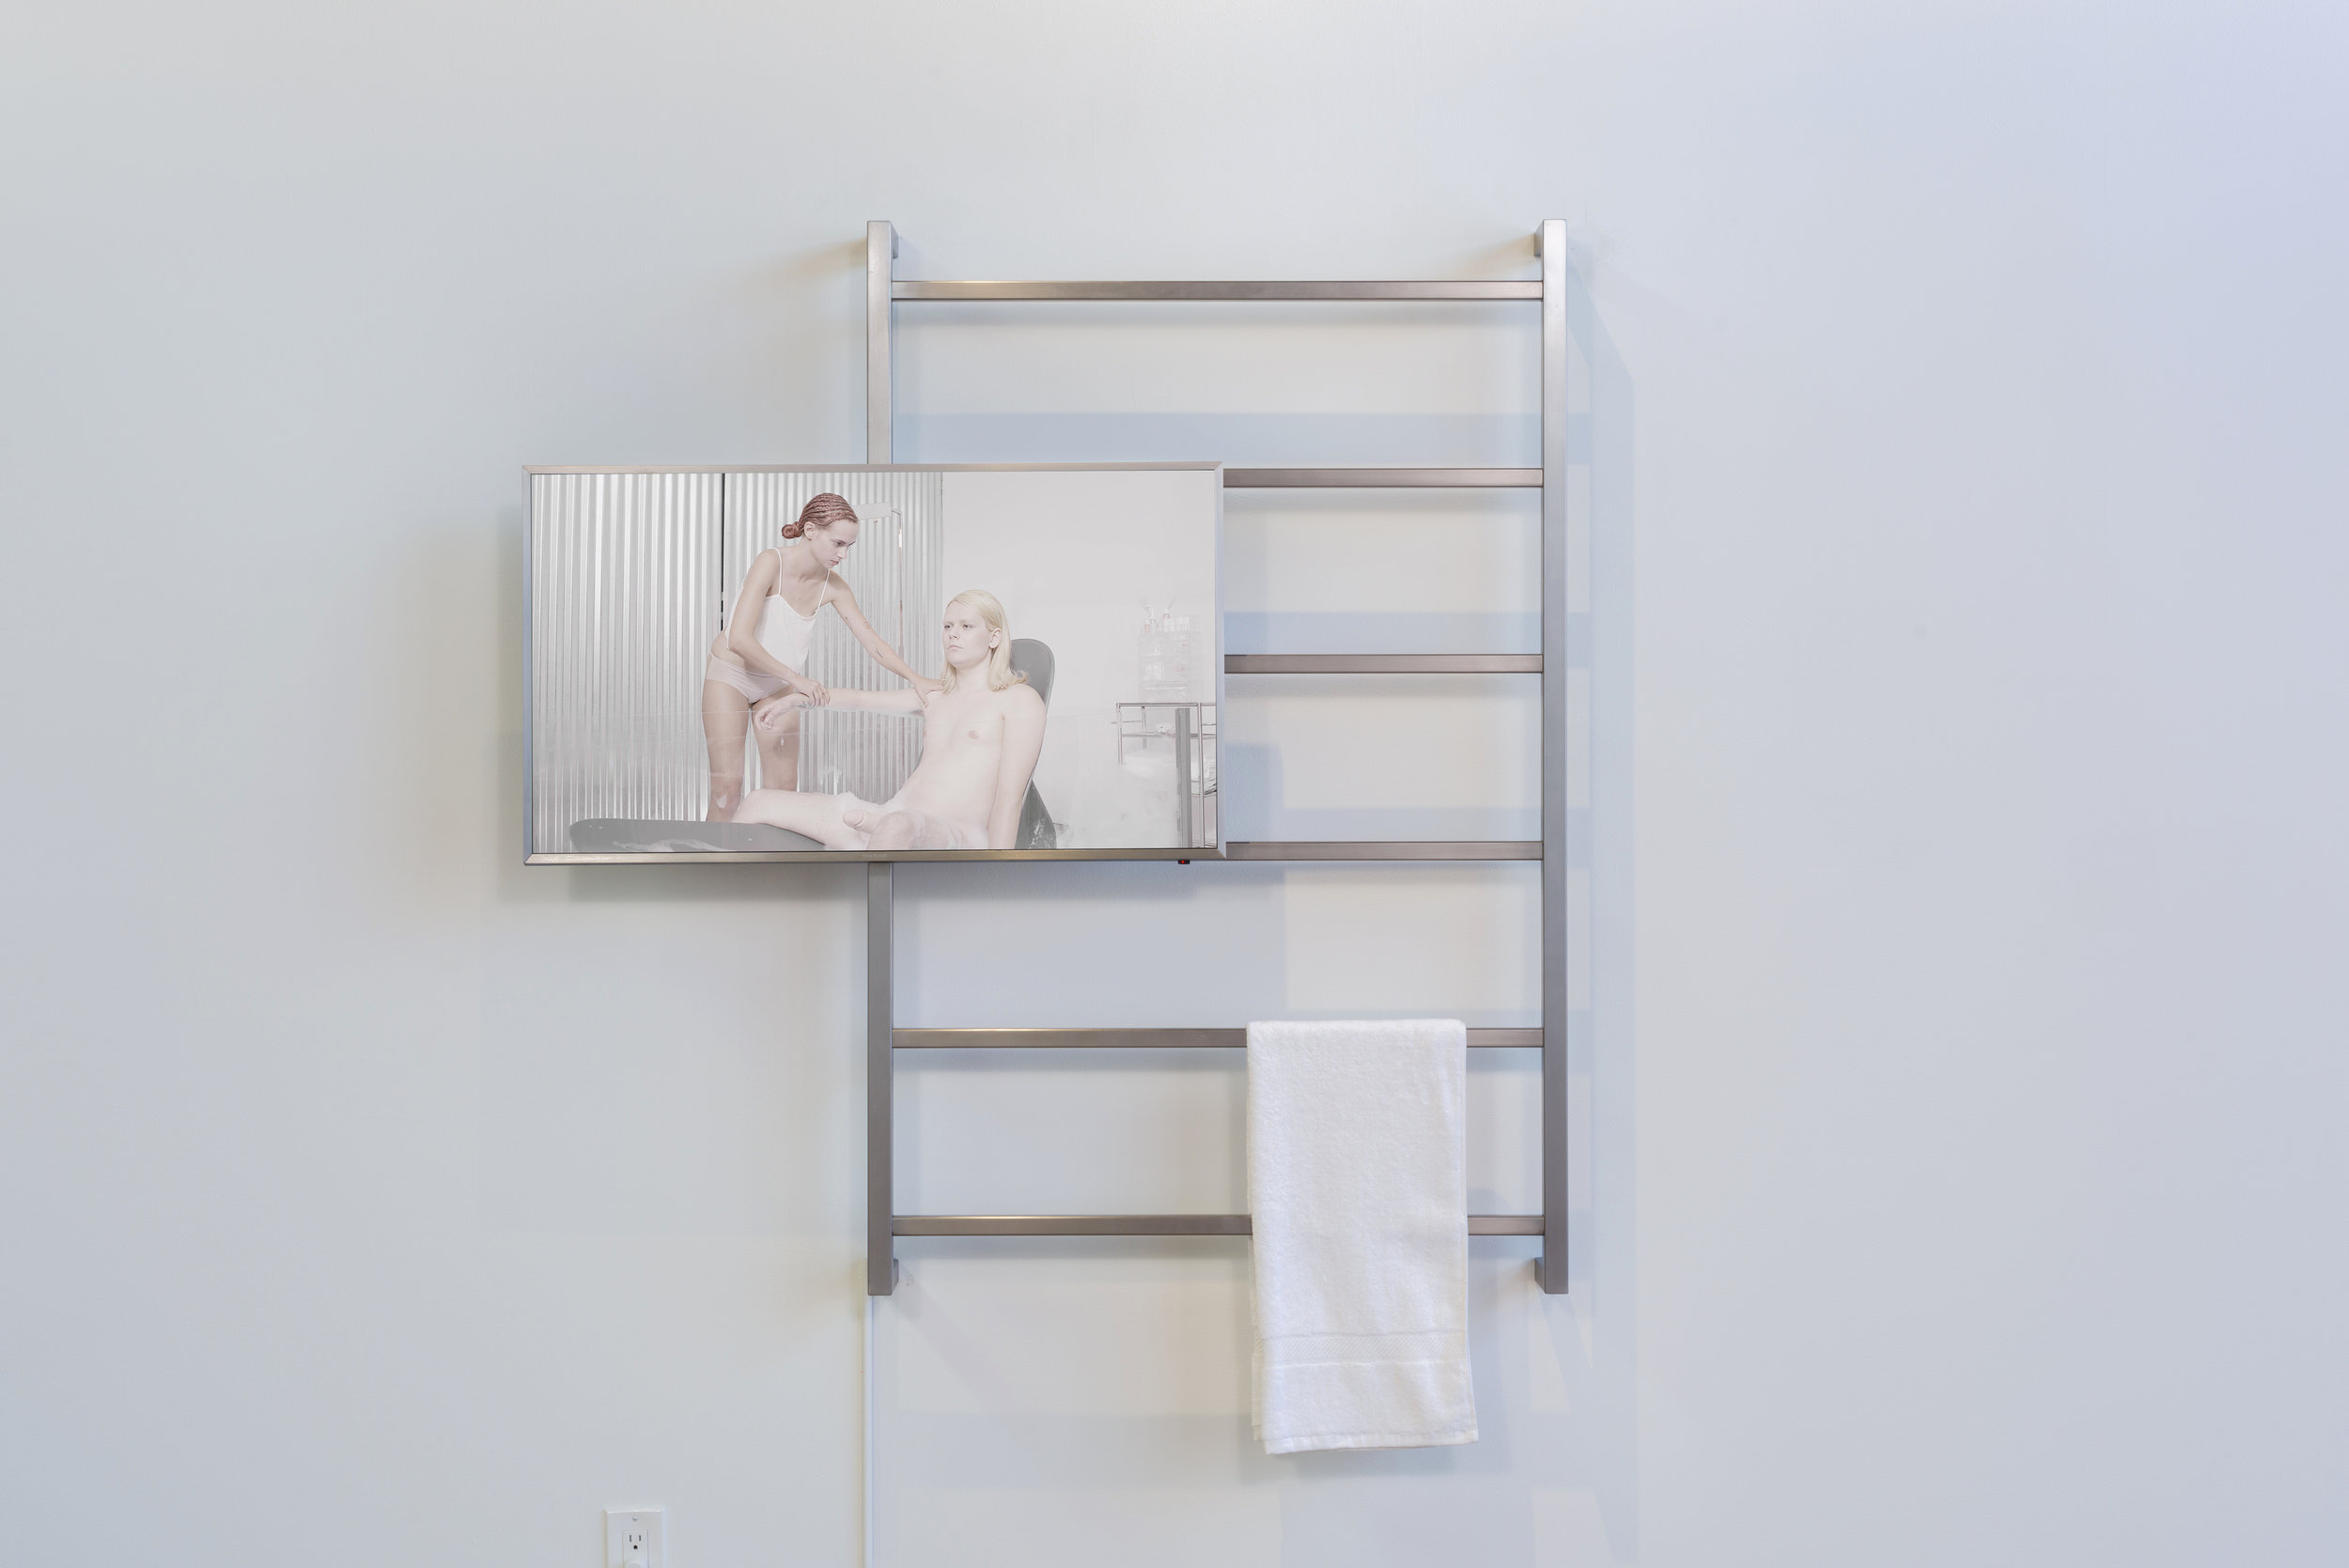   Amanda VIncelli   HYGIENA  2017 Single-channel HD video, brushed steel, towel 6:11, loop, dimensions variable Ed. 5 + 2AP; Unique sculptural edition 